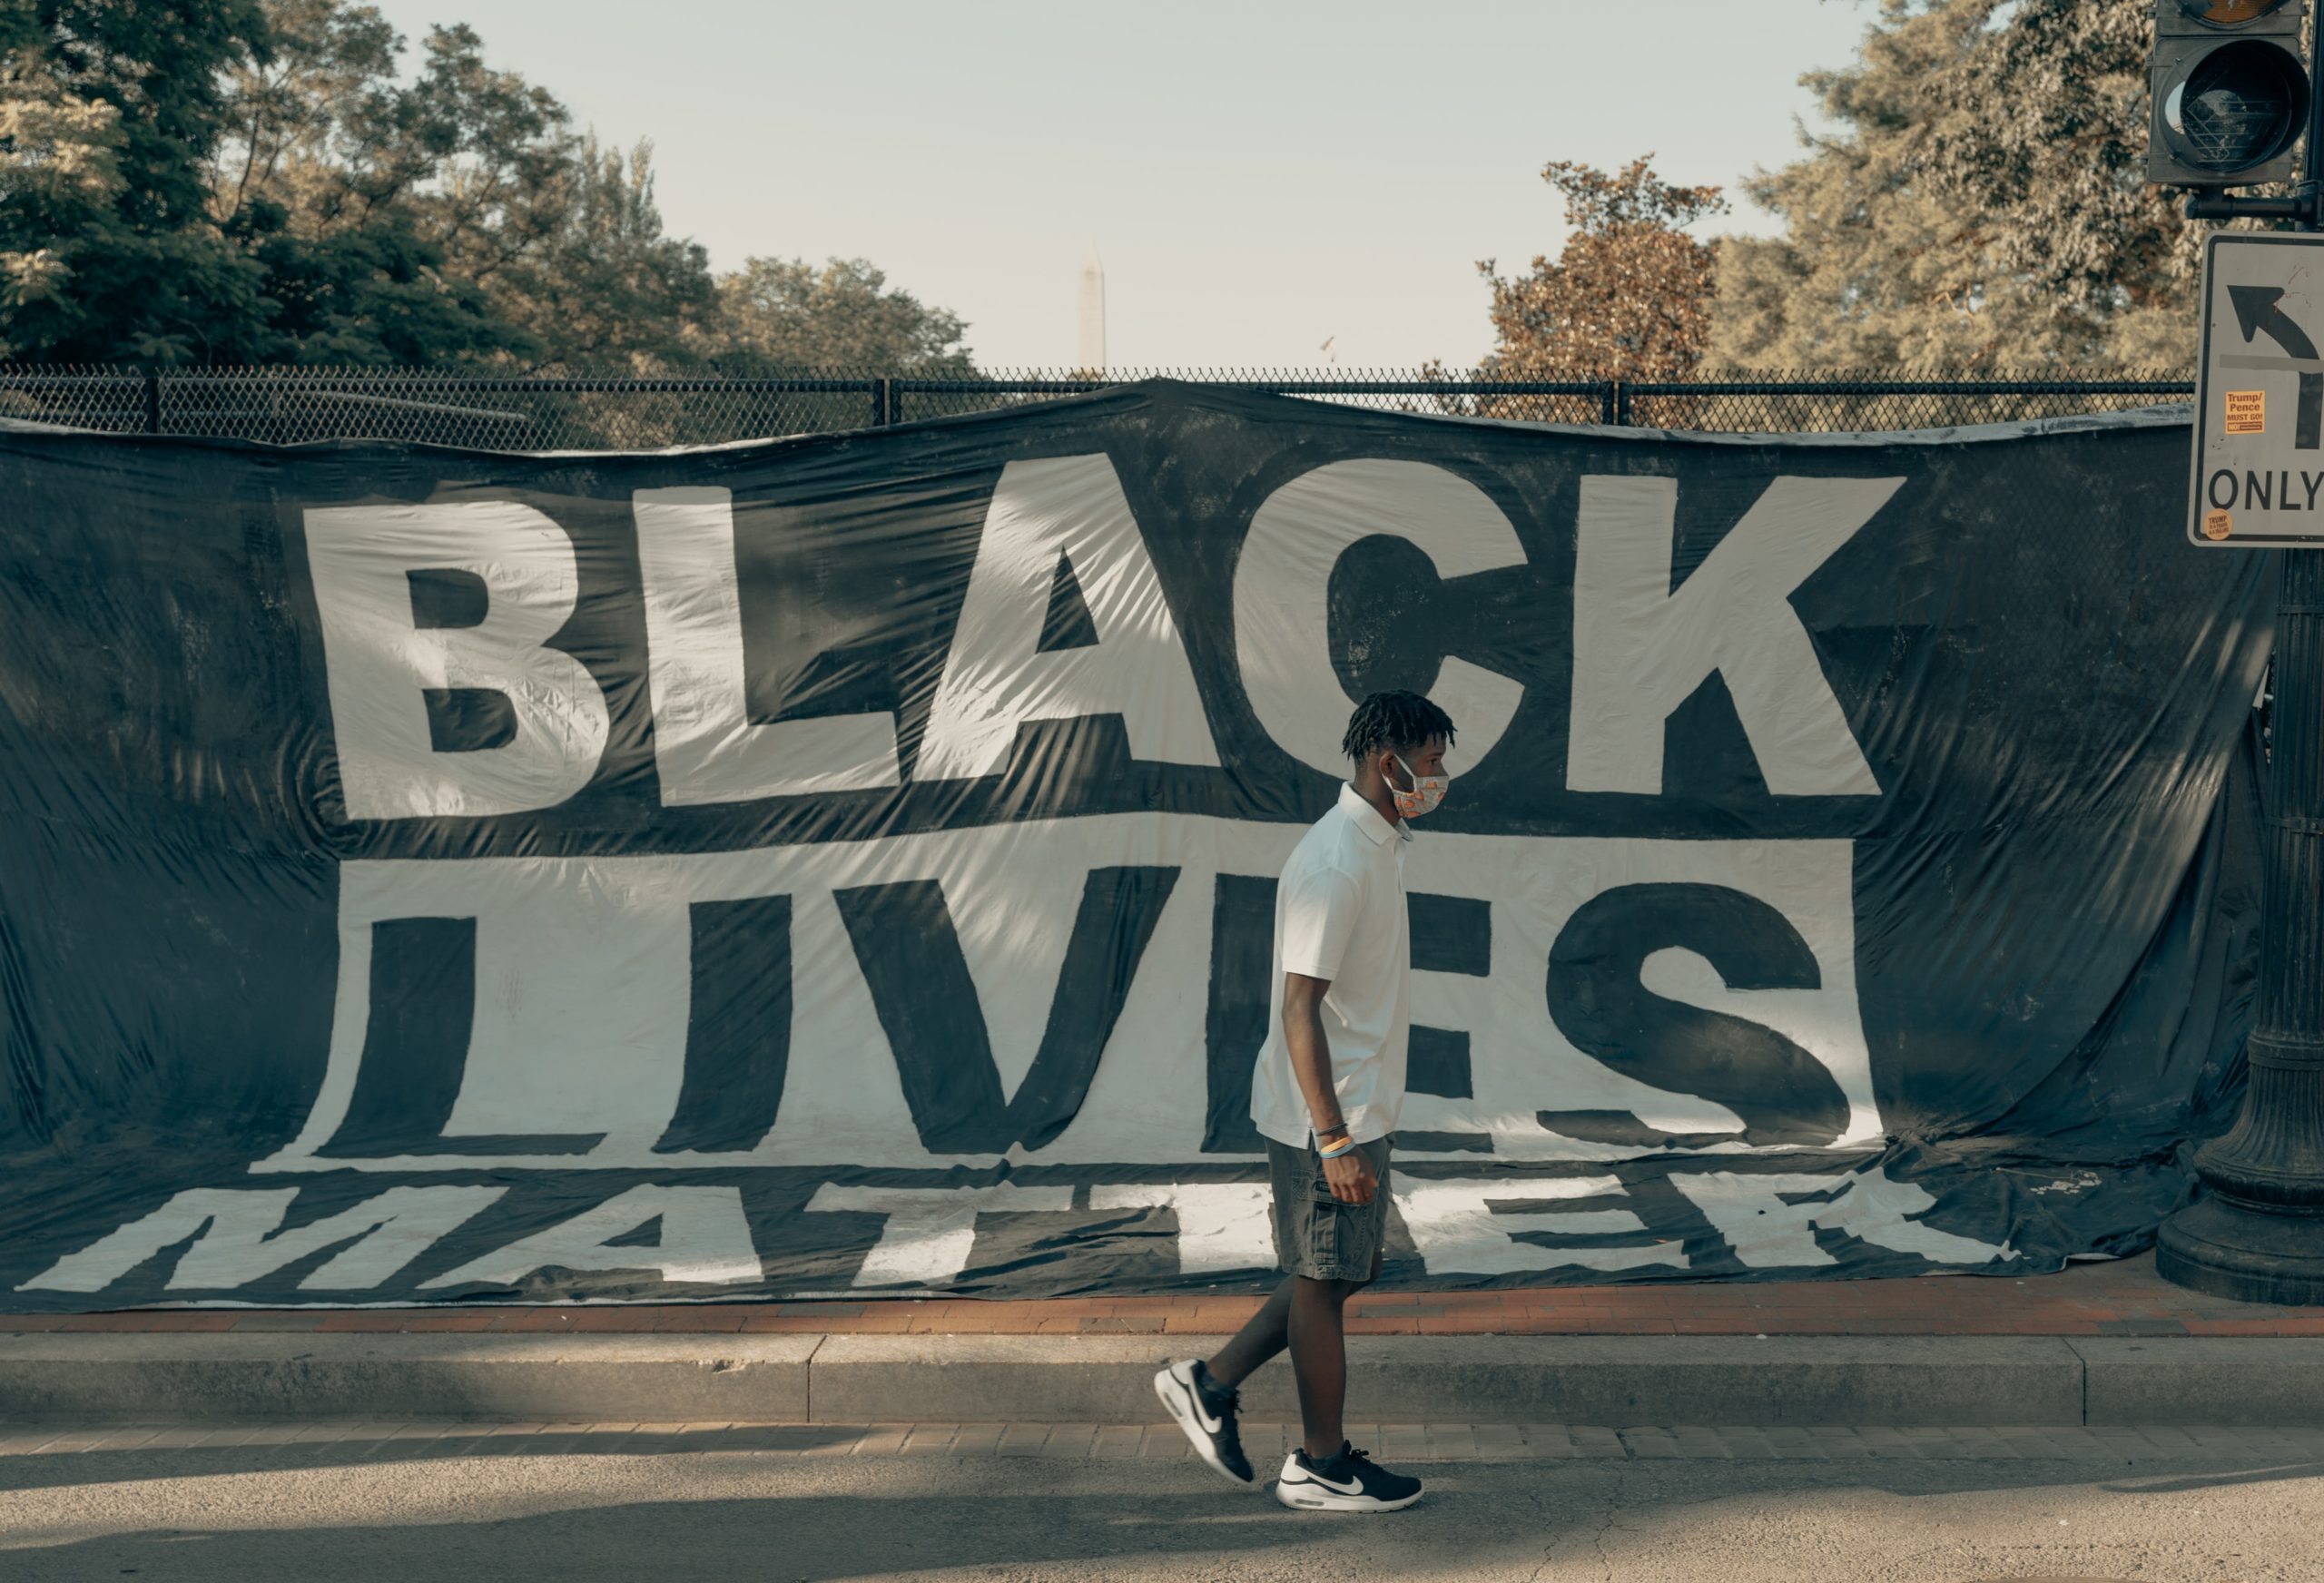 Tiktok censure l'expression " Black Lives Matter "